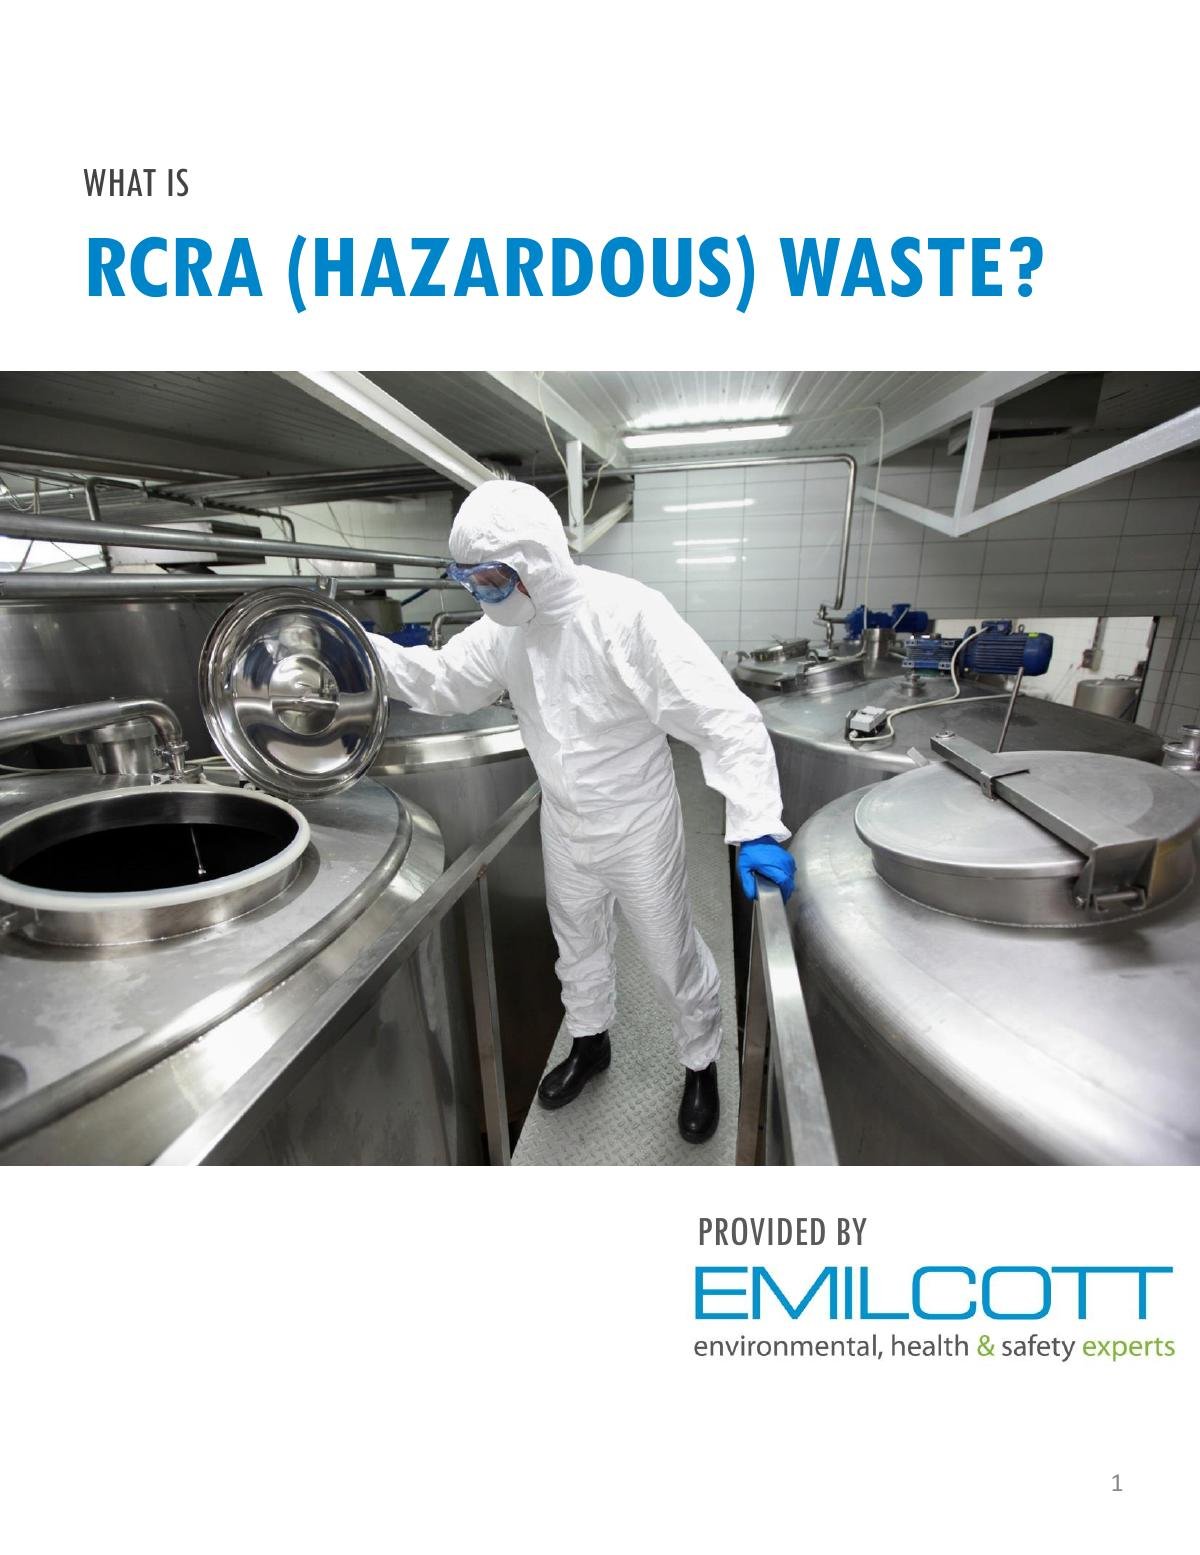 Guide to Identifying RCRA (Hazardous) Waste